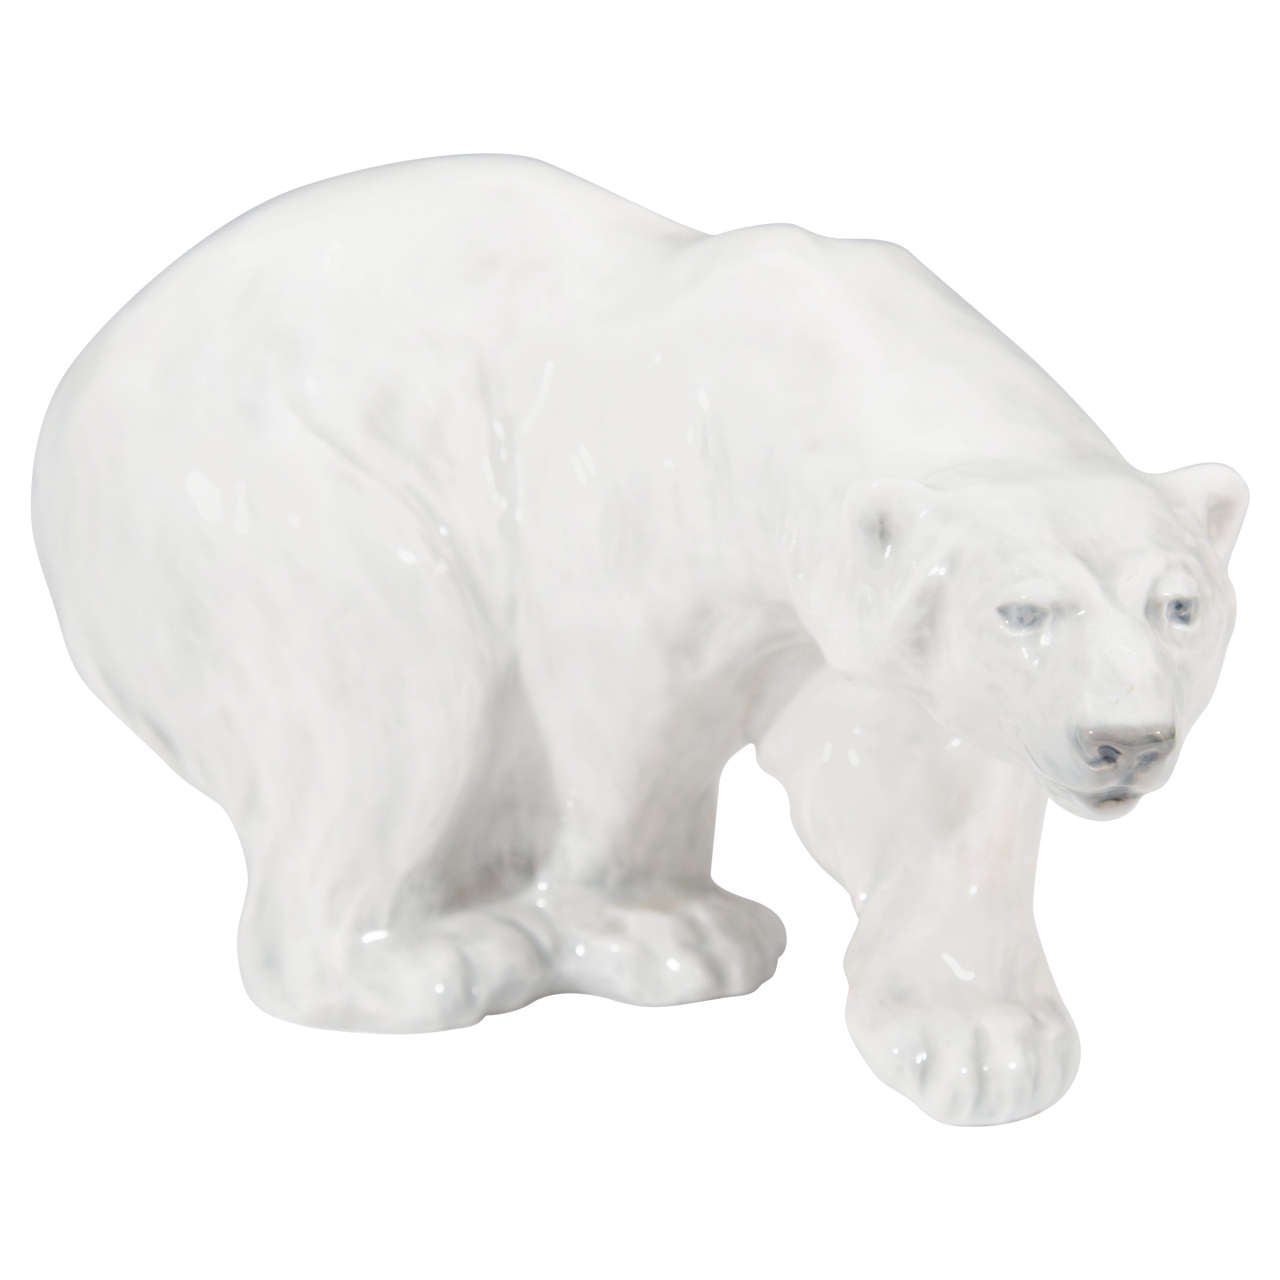 Details about   White Polar Bear Ceramic Figurine Animal Playing Violin Musical Statue FG013-3 